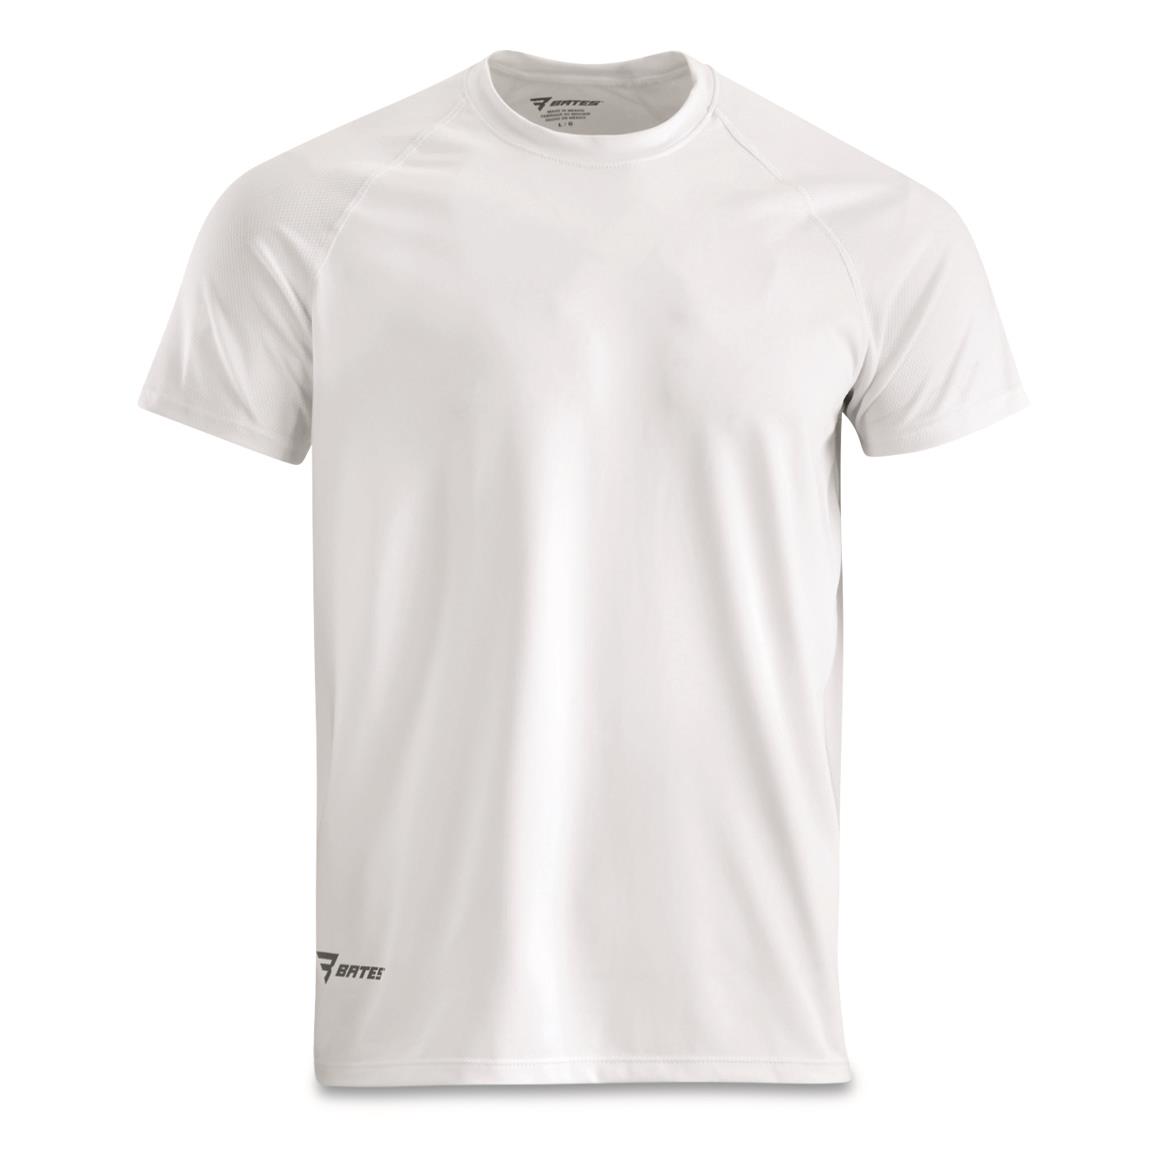 U.S. Military Surplus Bates Short Sleeve Base Layer Shirt, New, White